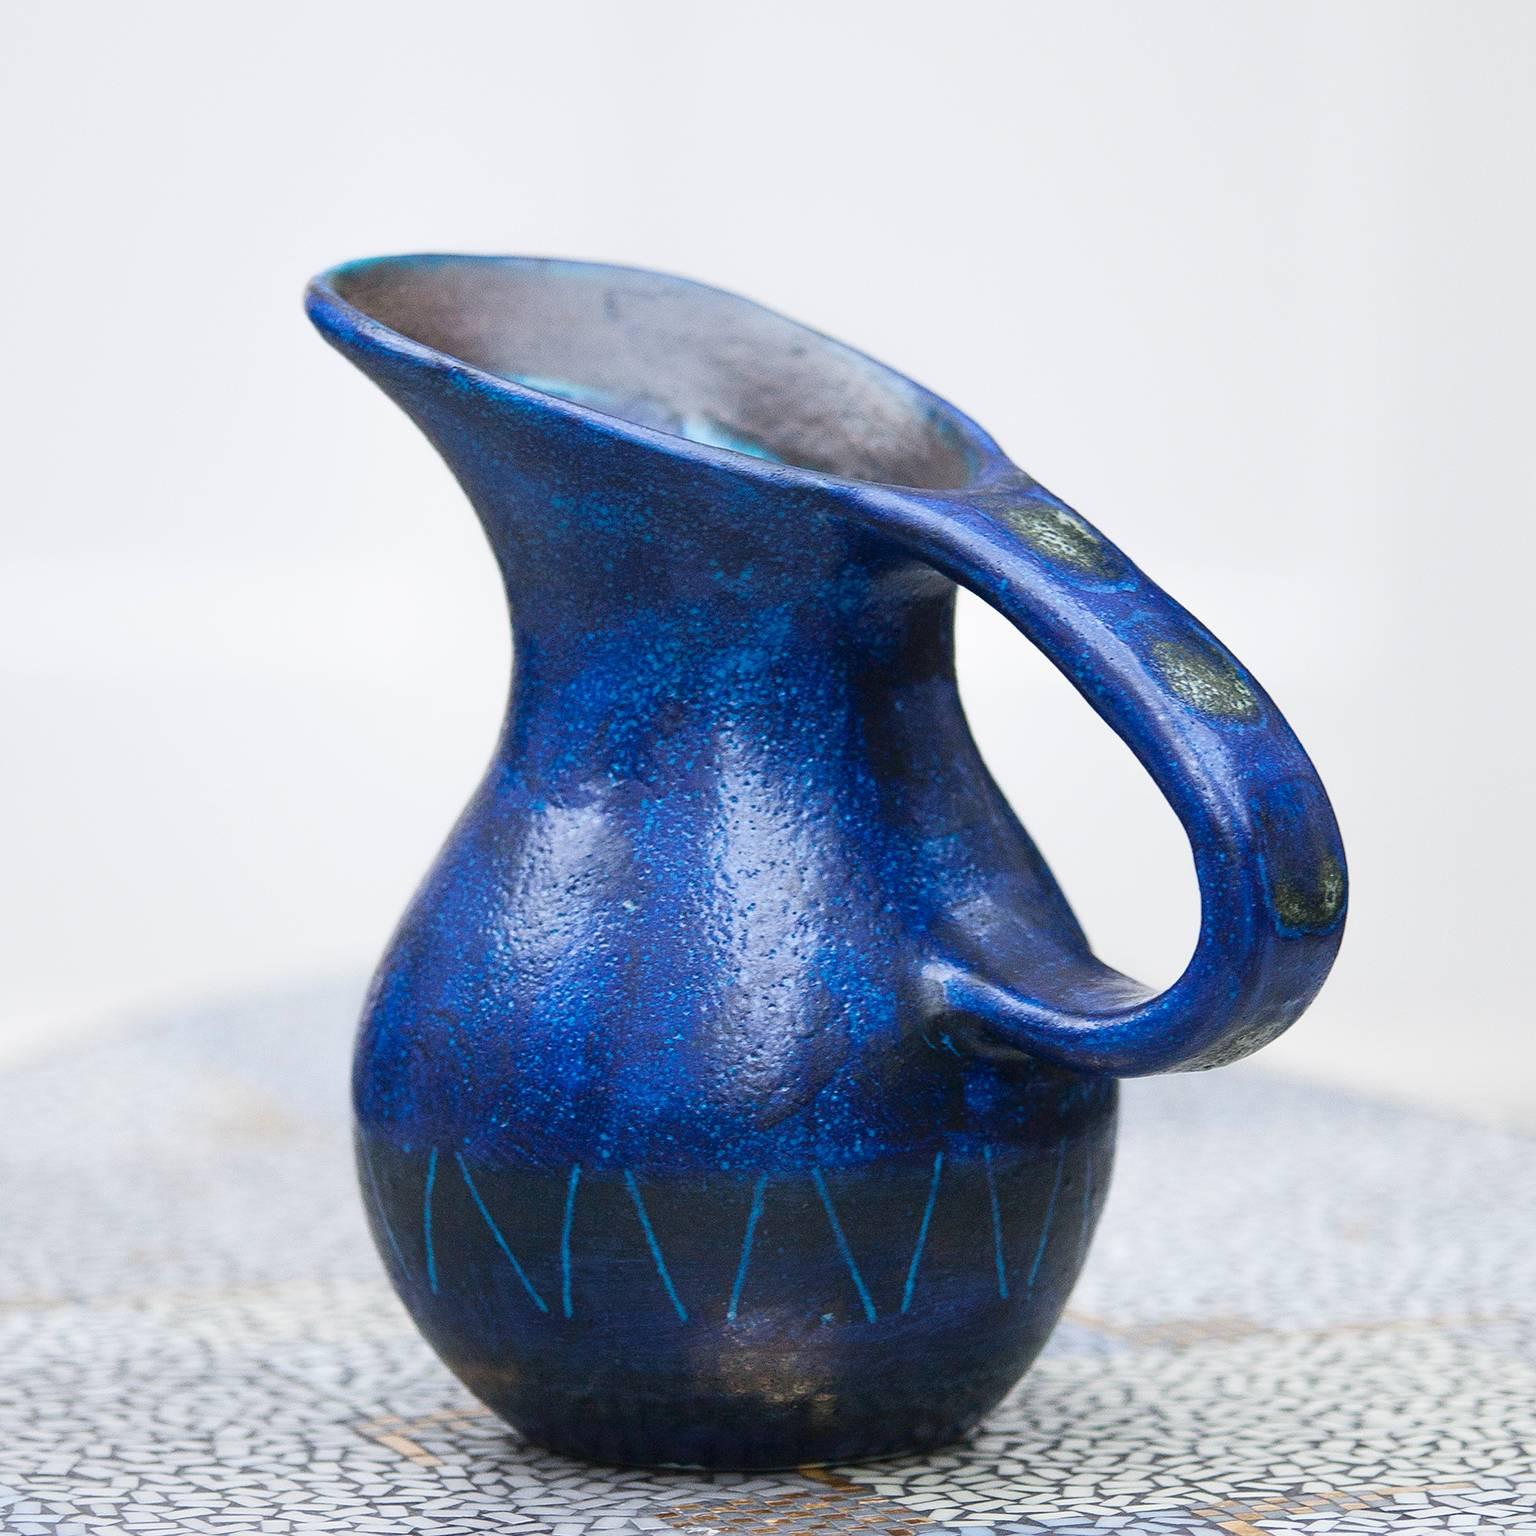 Bruno Gambone Keramikkrug aus blau glasierter Keramik, Italien, 1958.
Maße: H 23 x B 22 x T 15 cm.